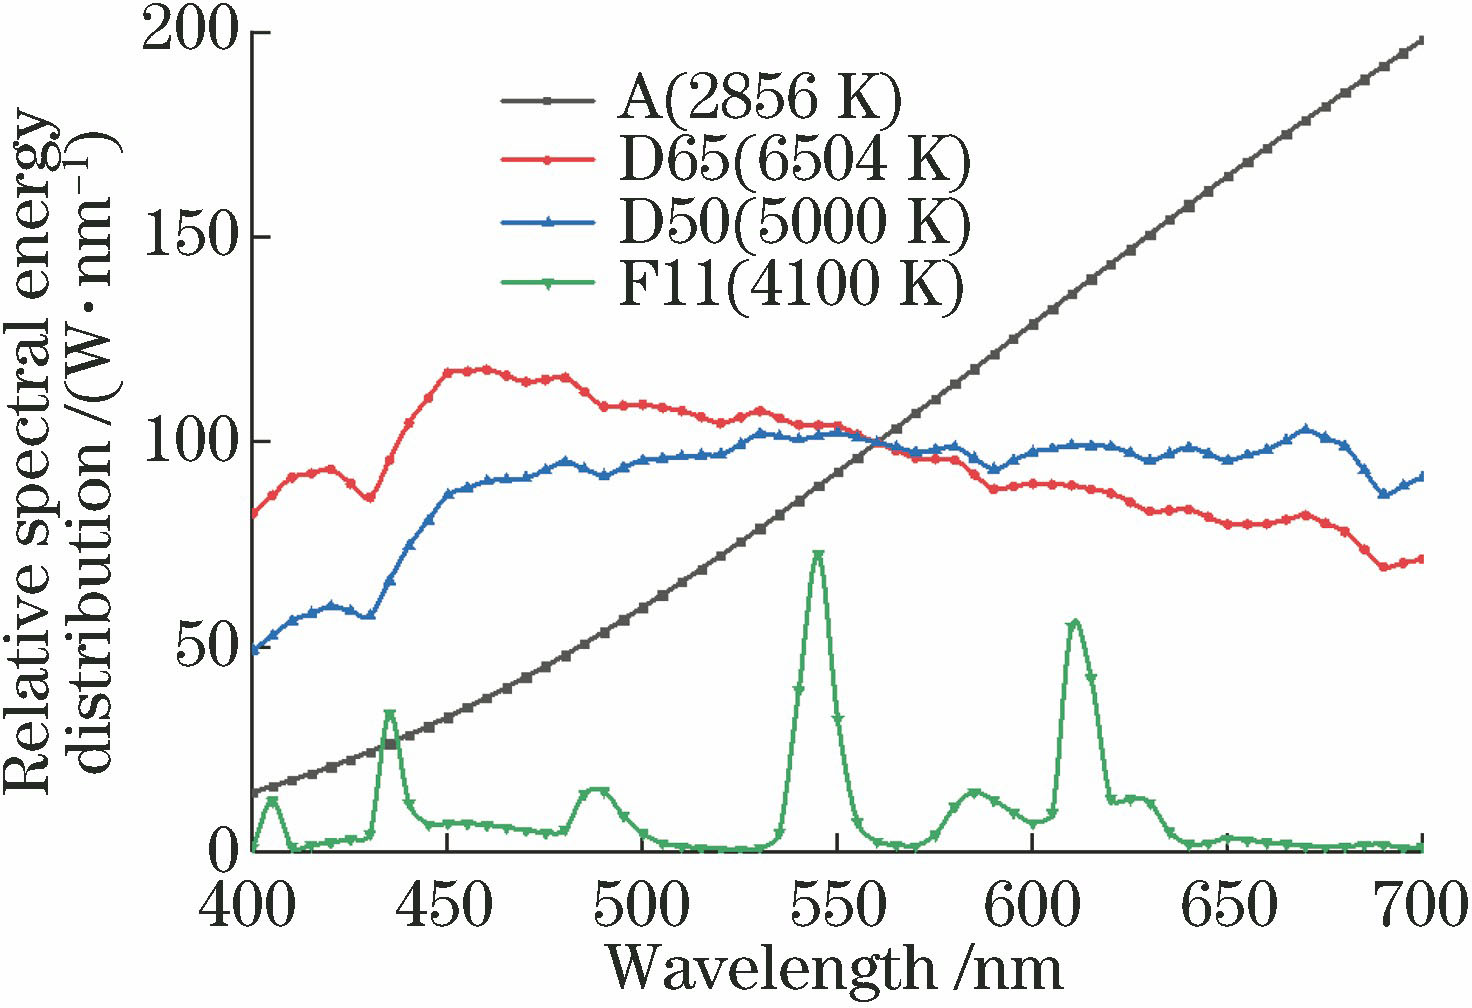 Relative spectral energy distribution curves of four test illuminates